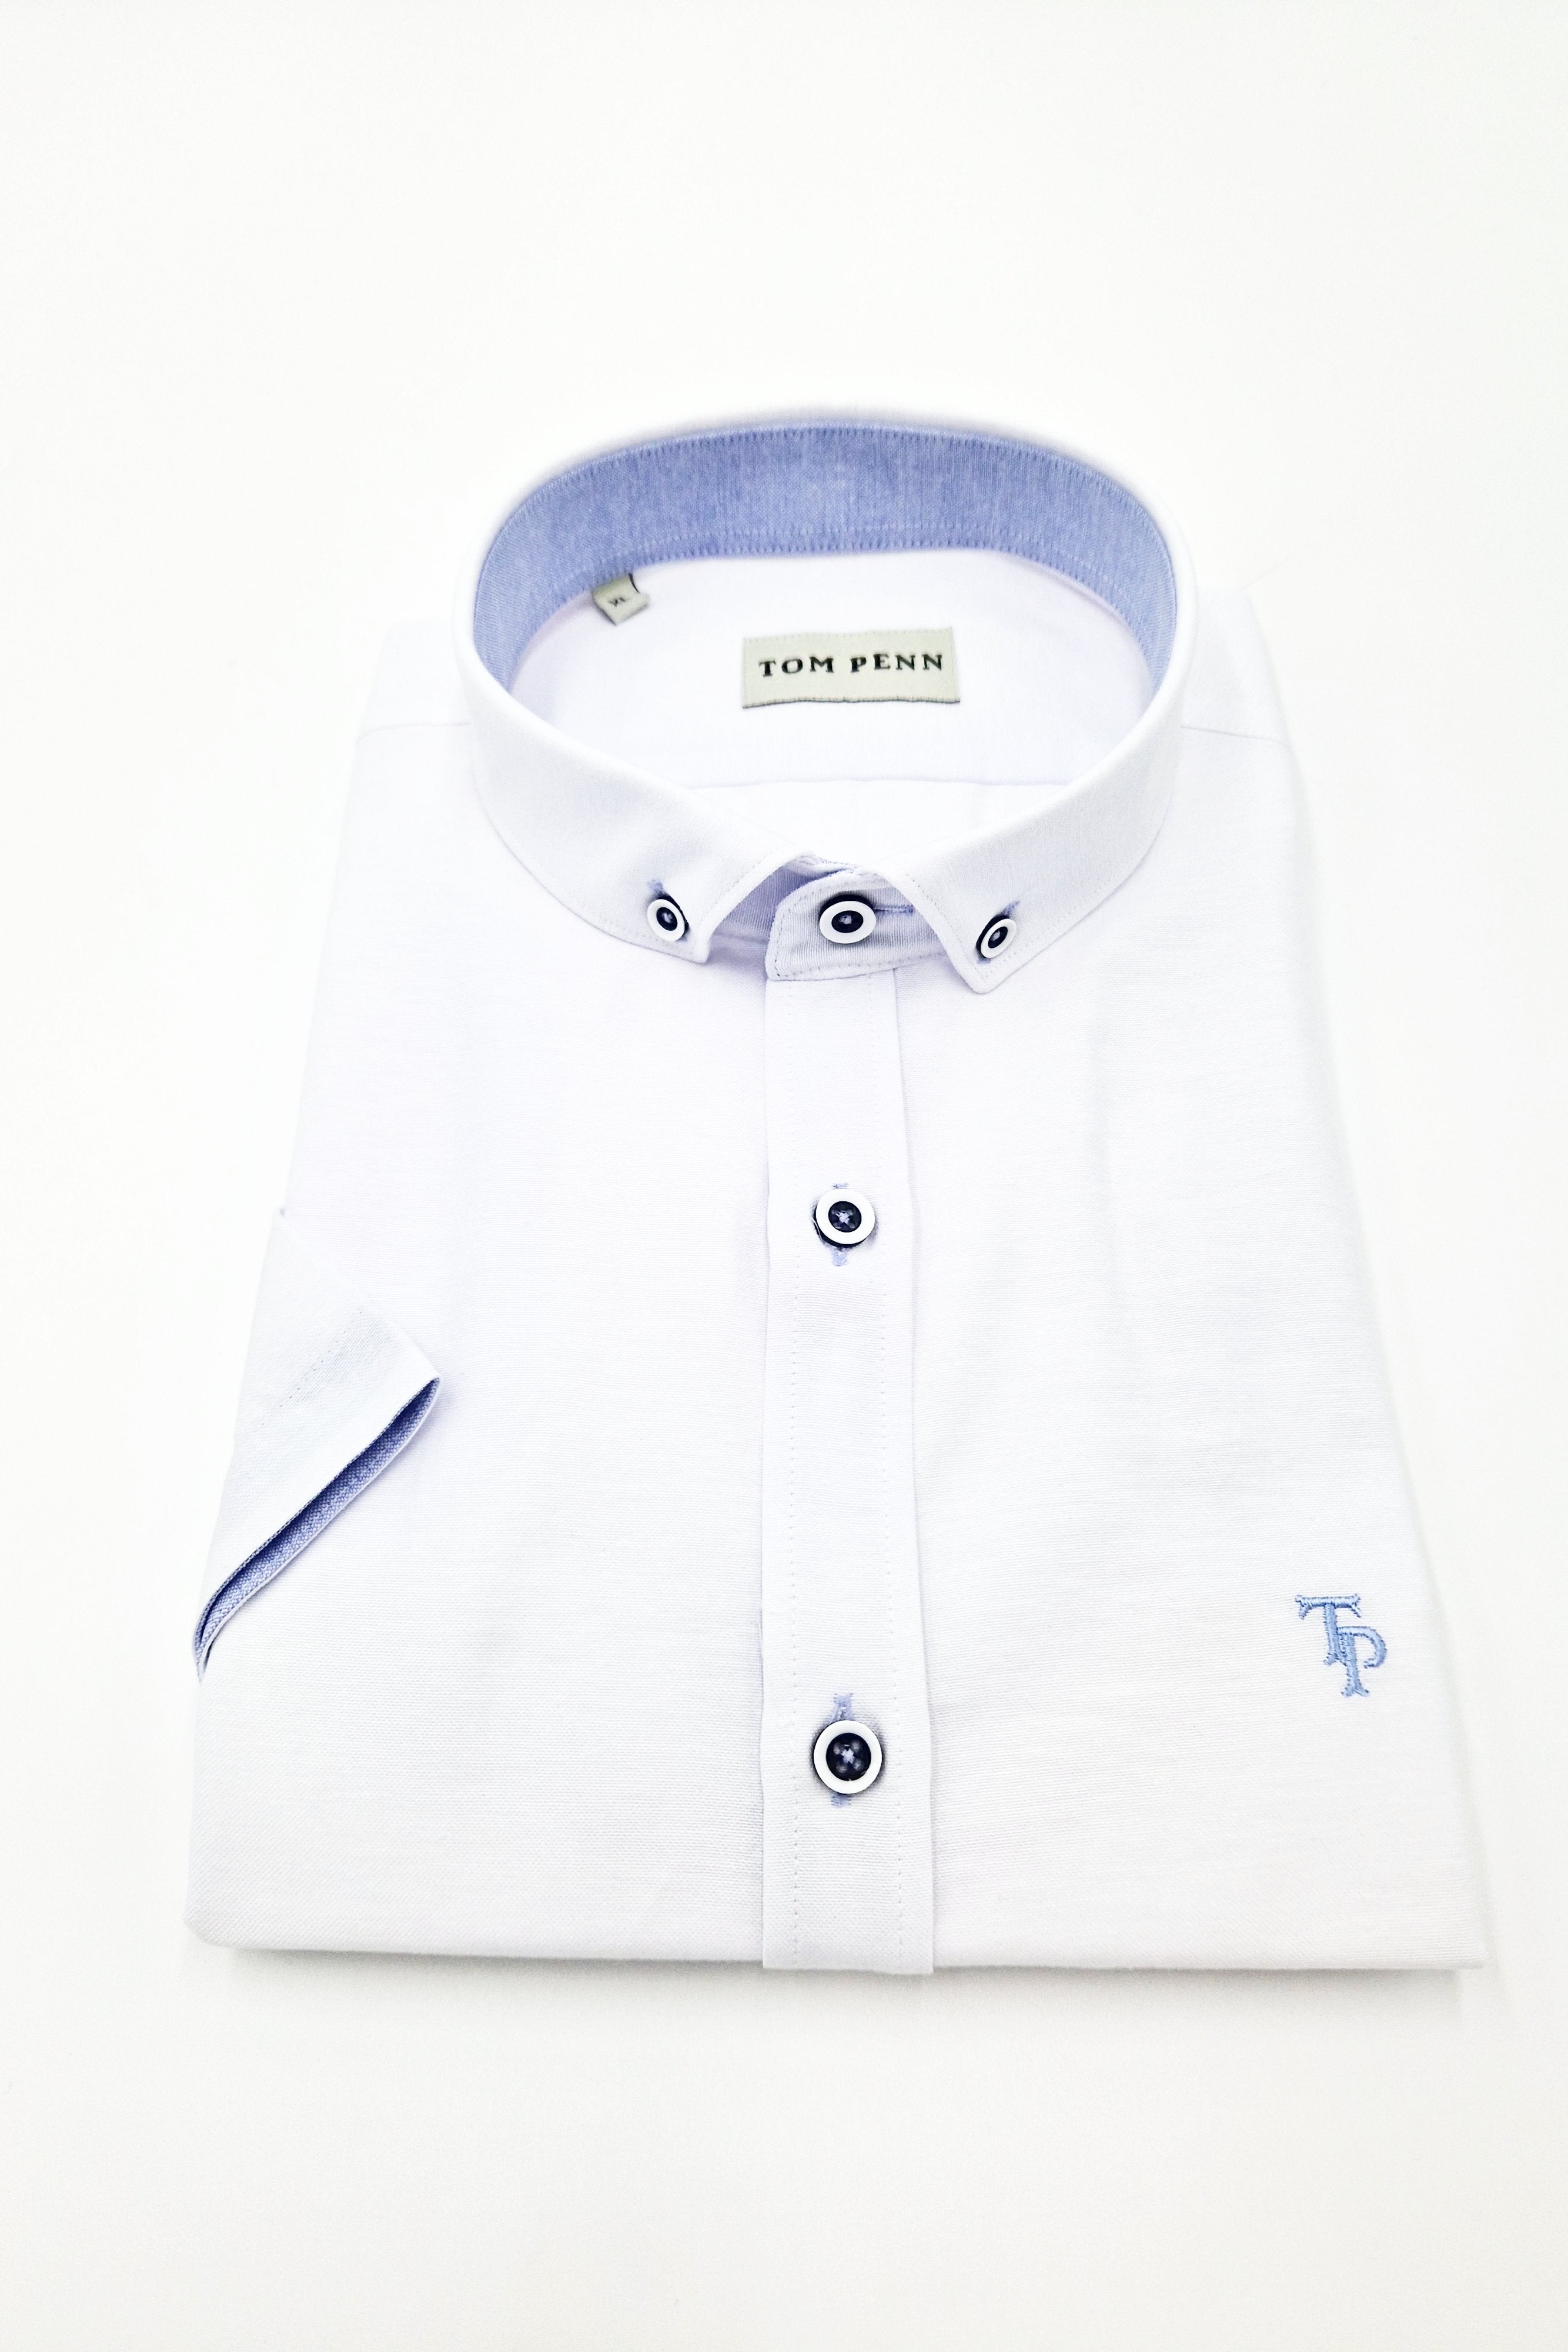 Short Sleeve Oxford White Shirt